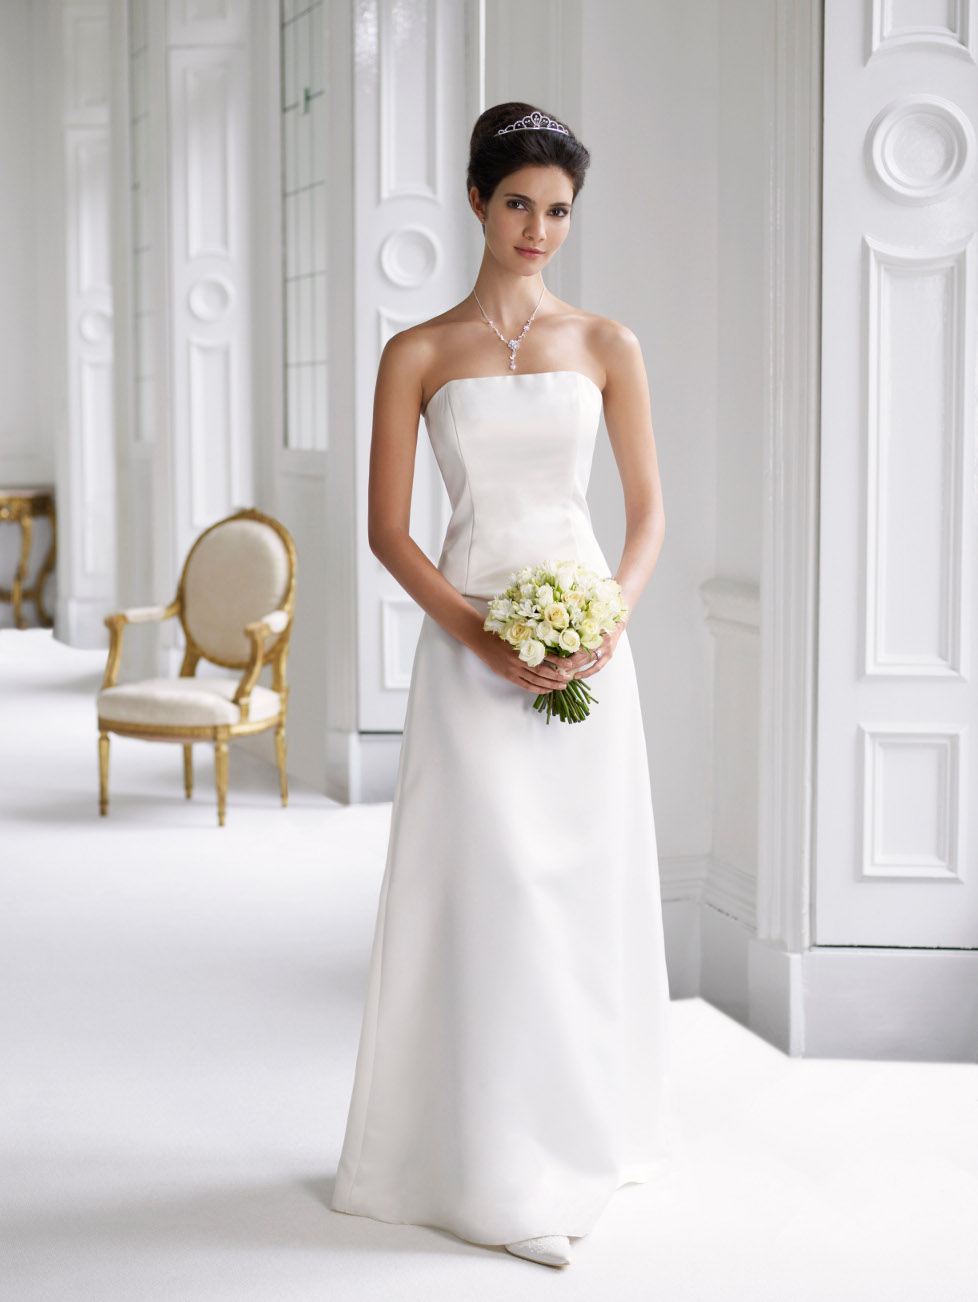 stunning white wedding dress